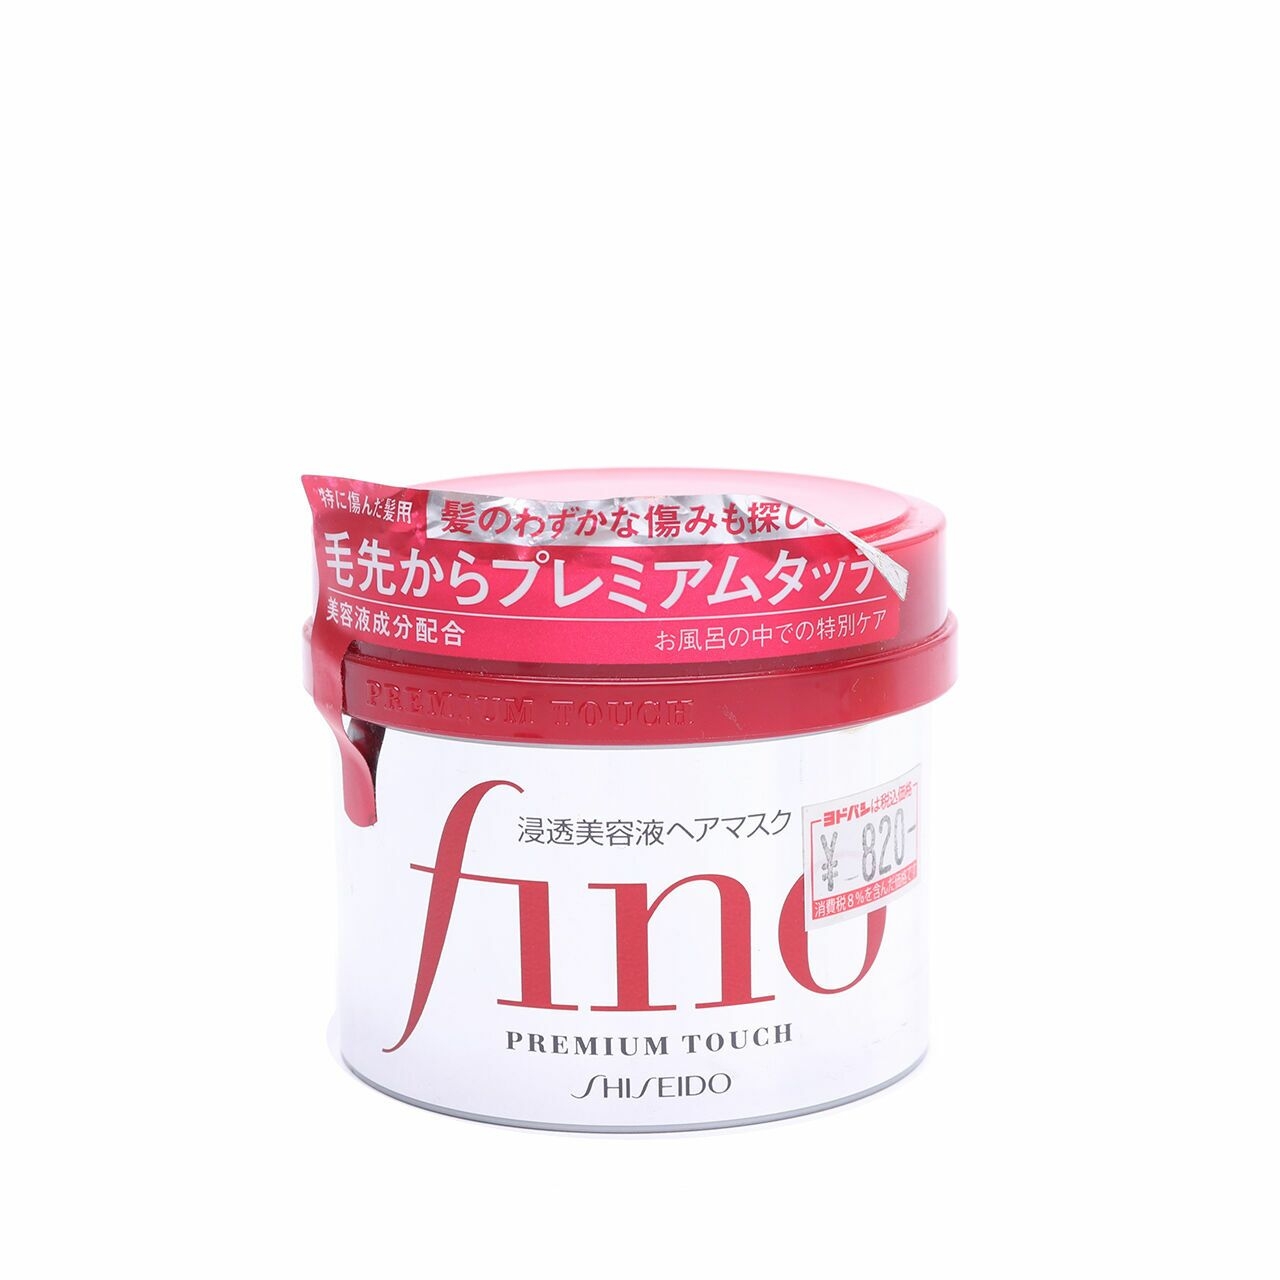 Shiseido Fino Premium Touch Hair Care